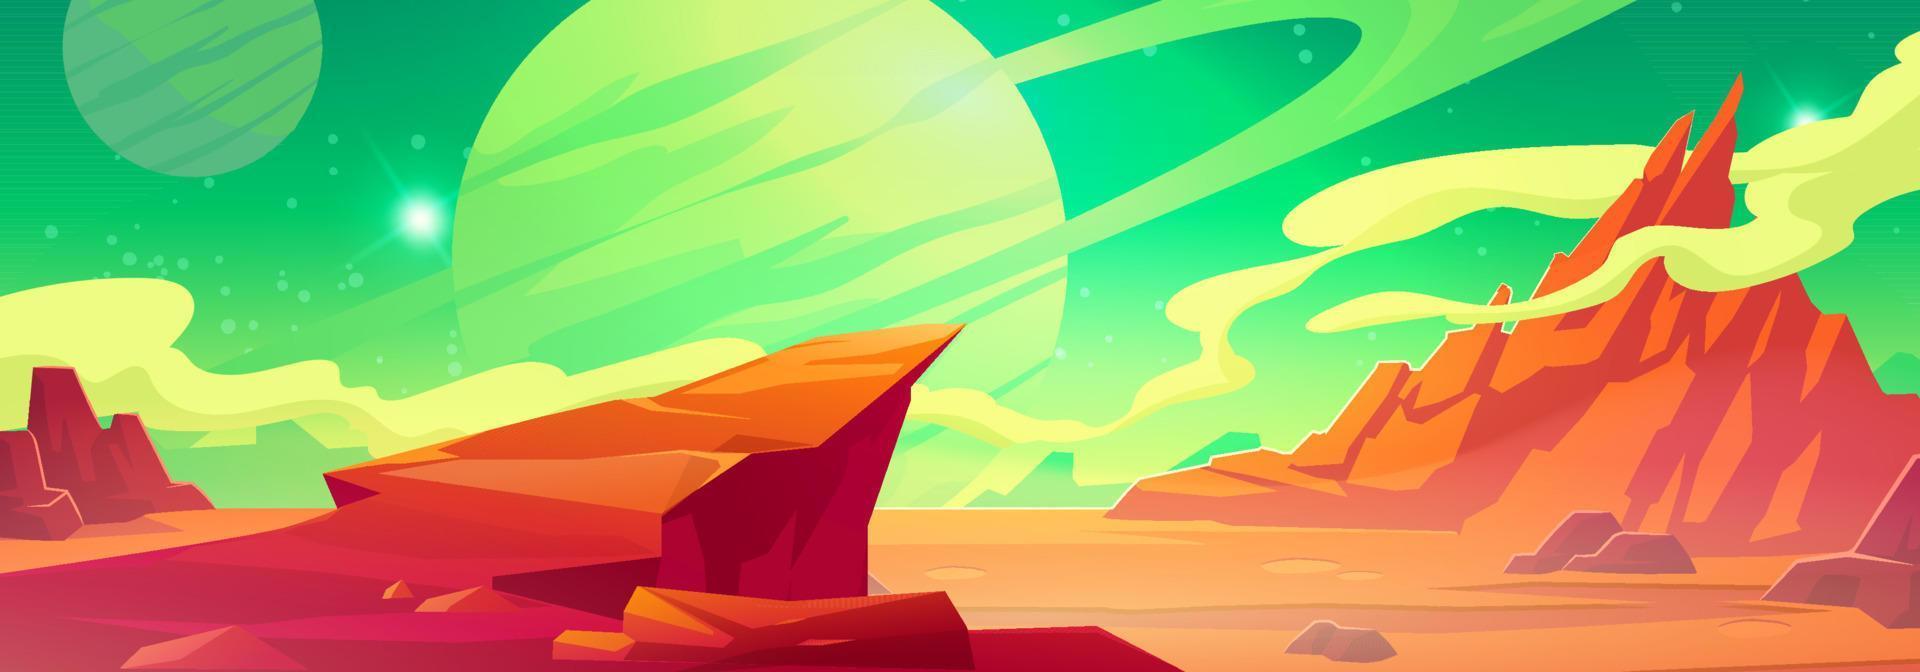 Mars landscape, alien planet, martian background vector